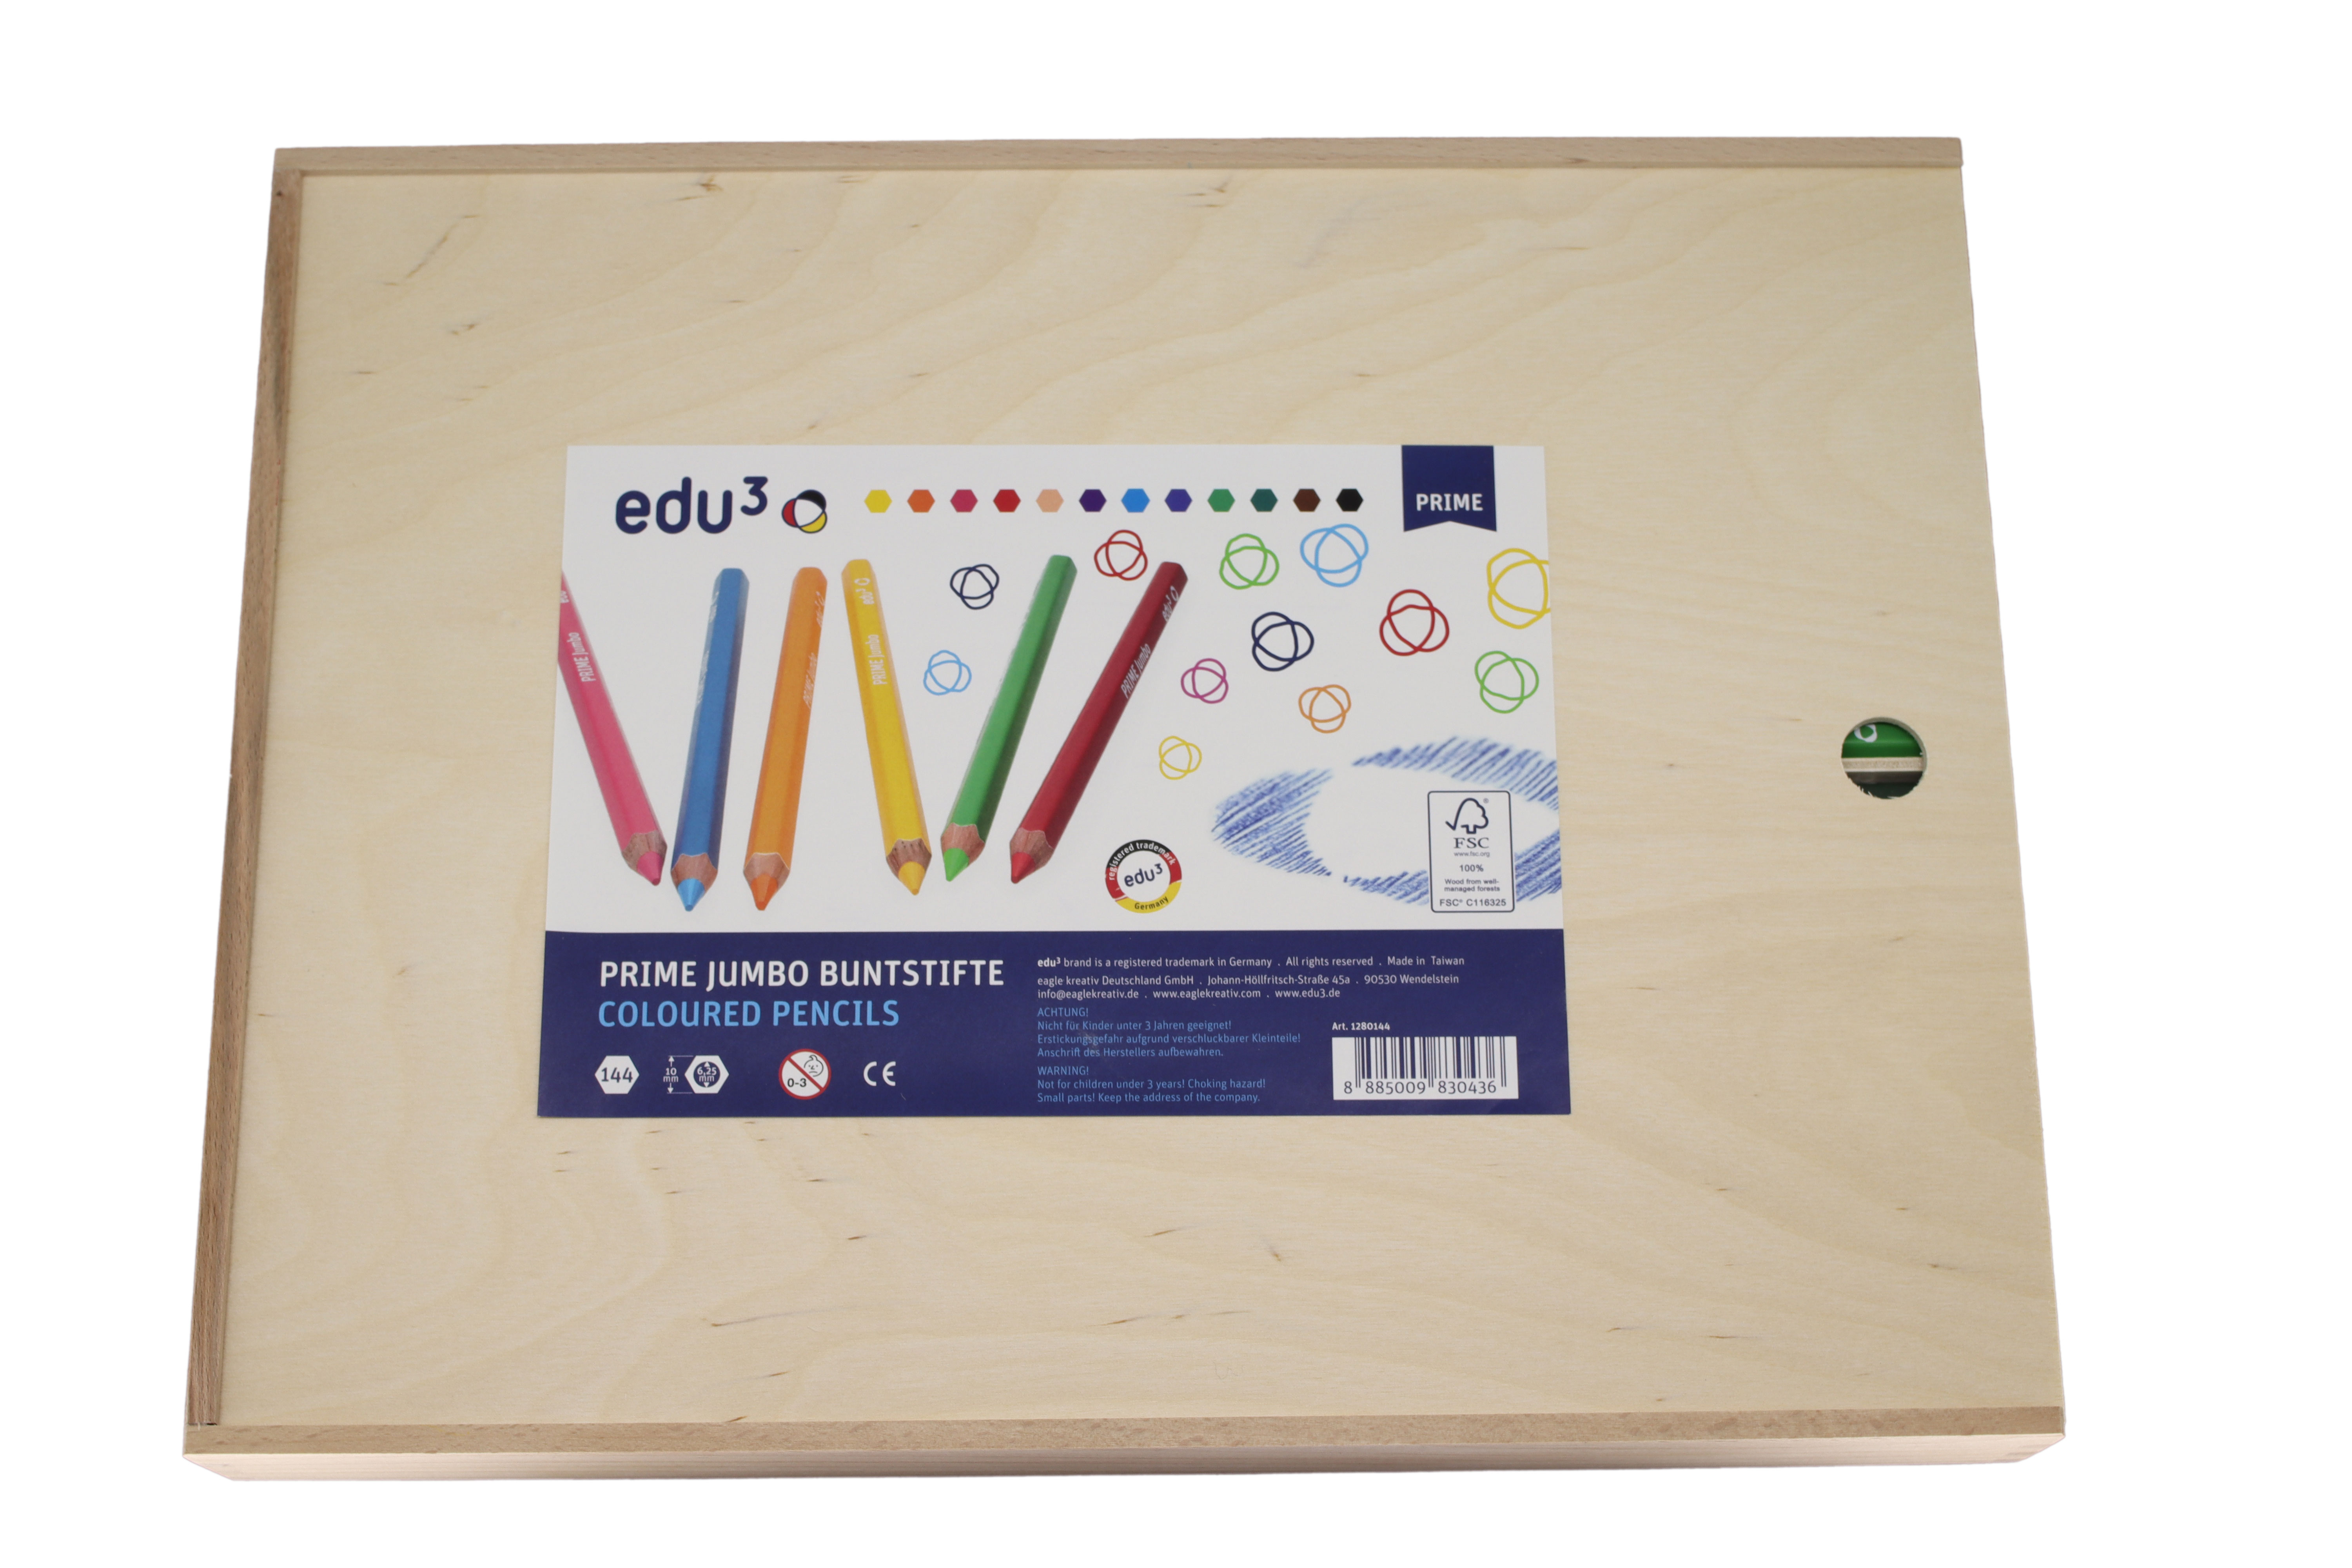 edu³ PRIME Jumbo colored pencils hex wooden box